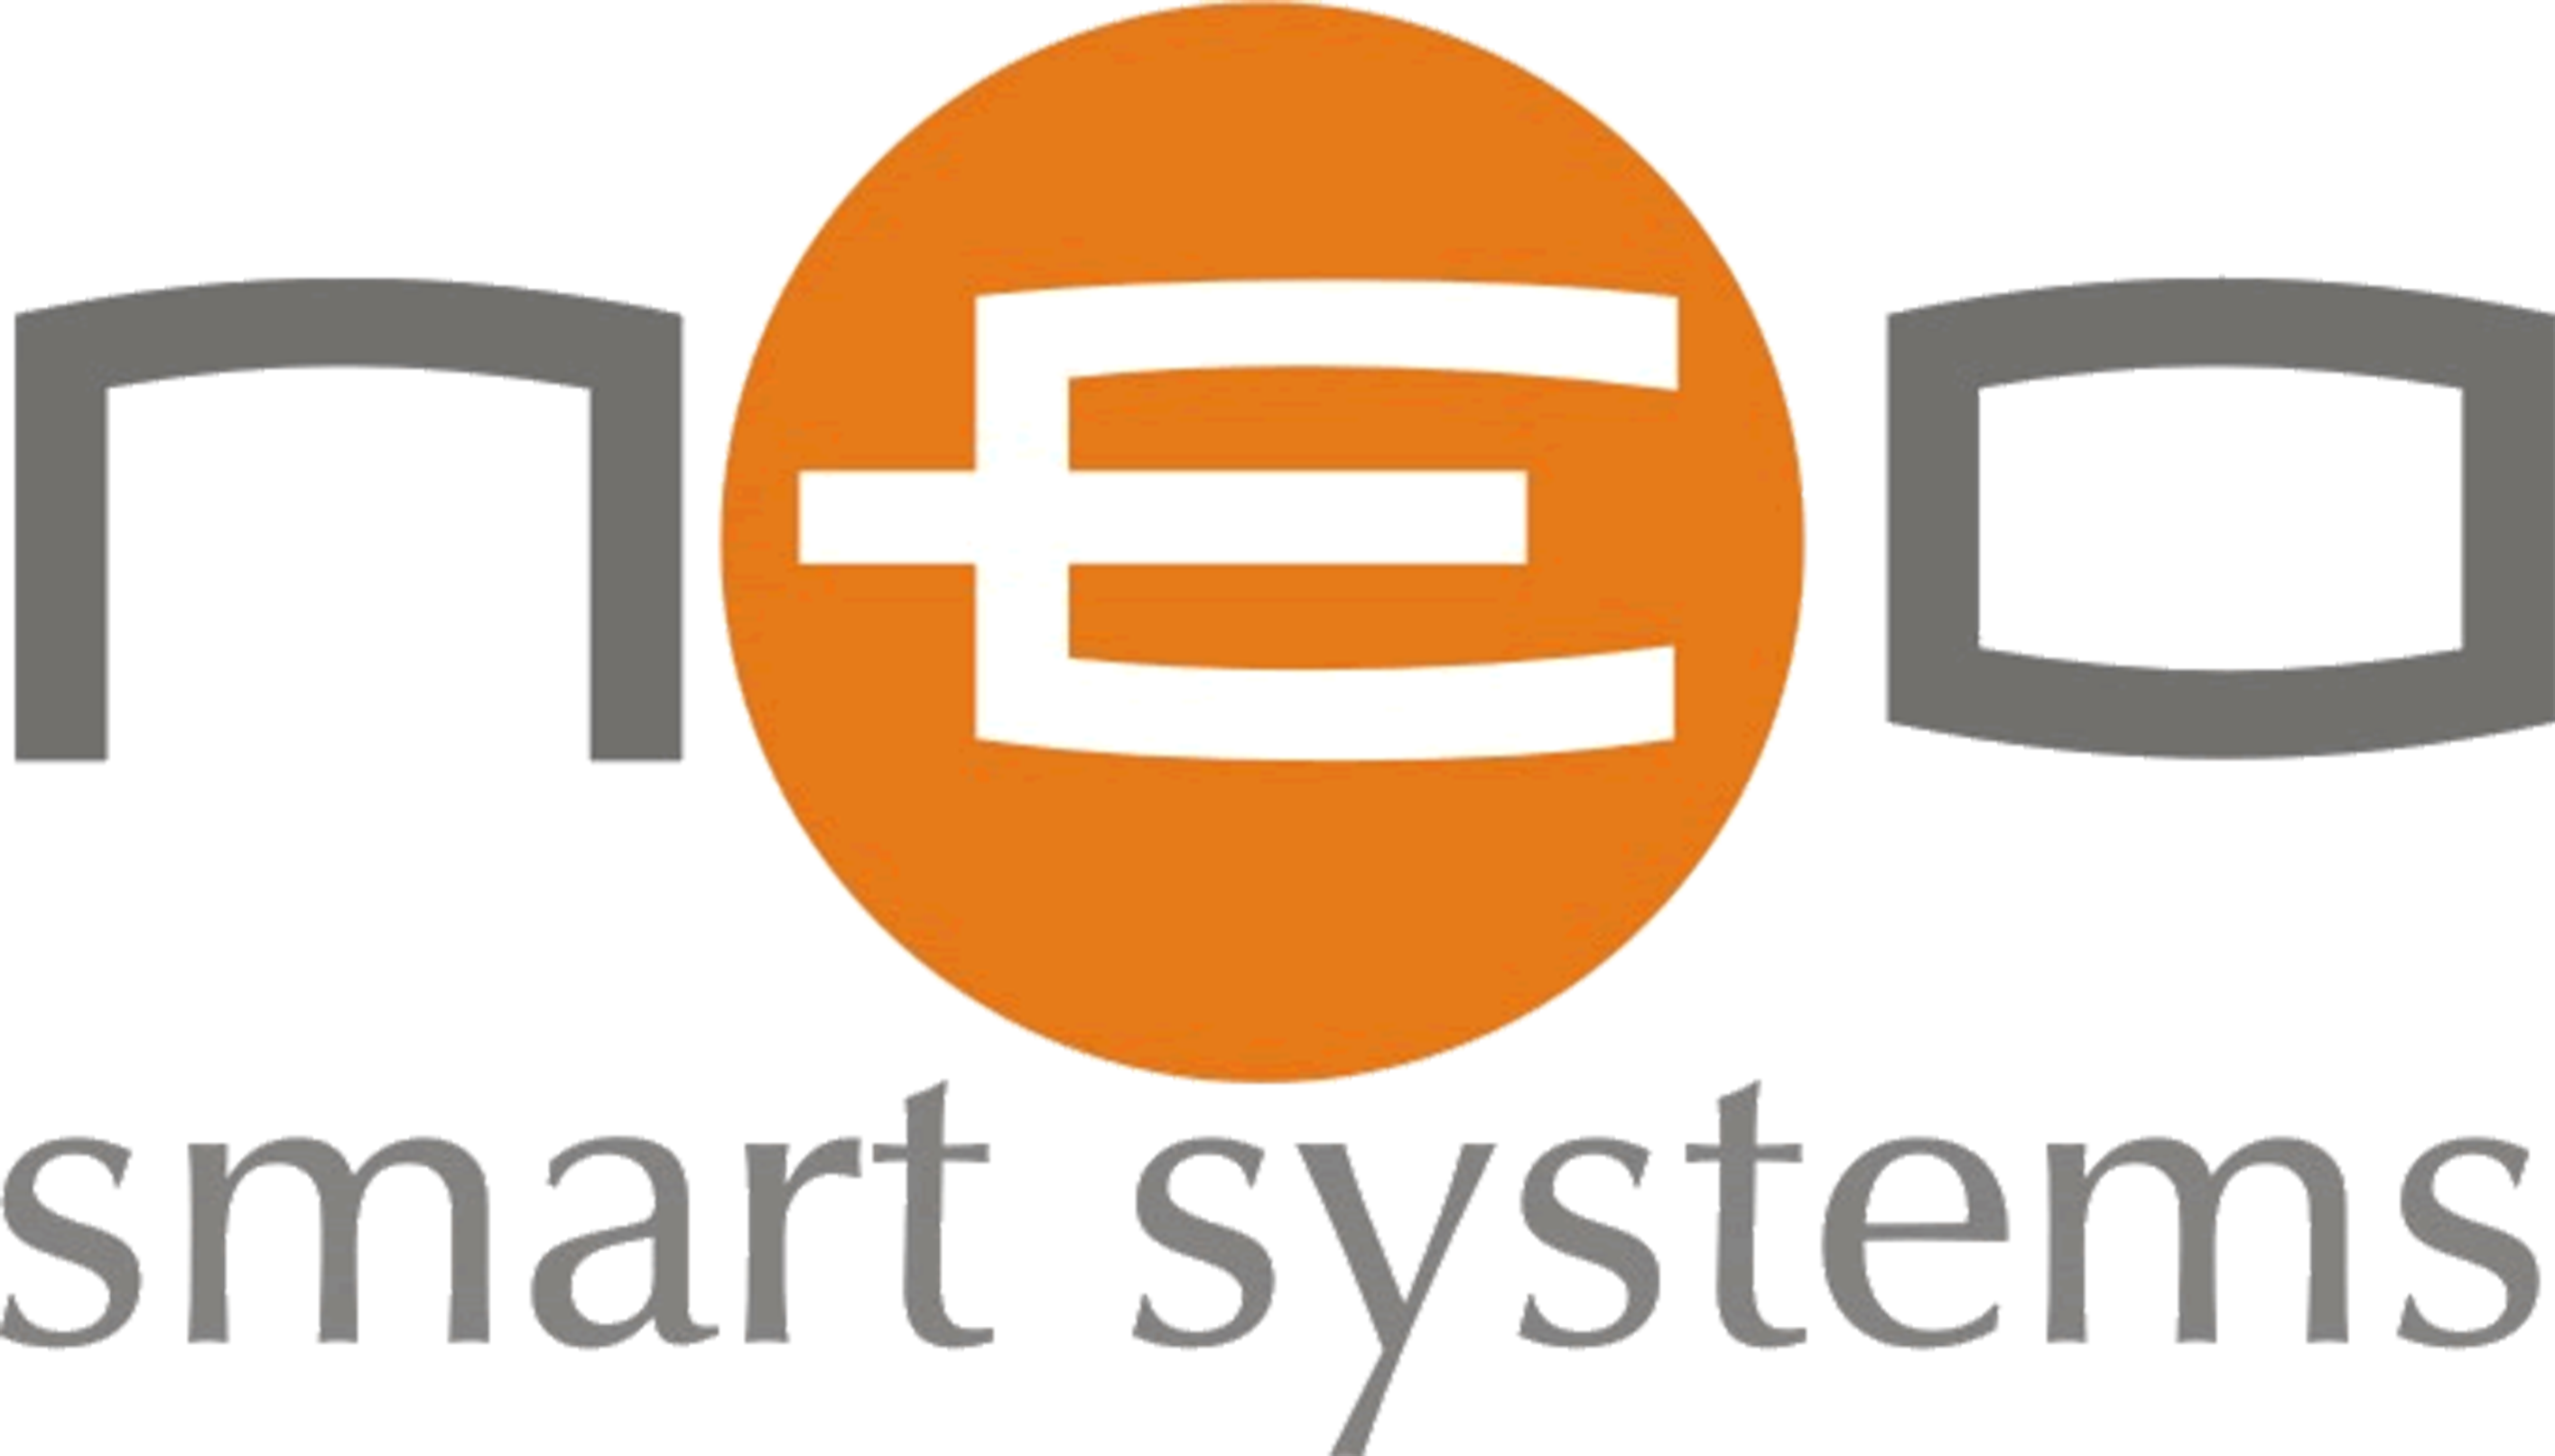 NeoSmart Systems